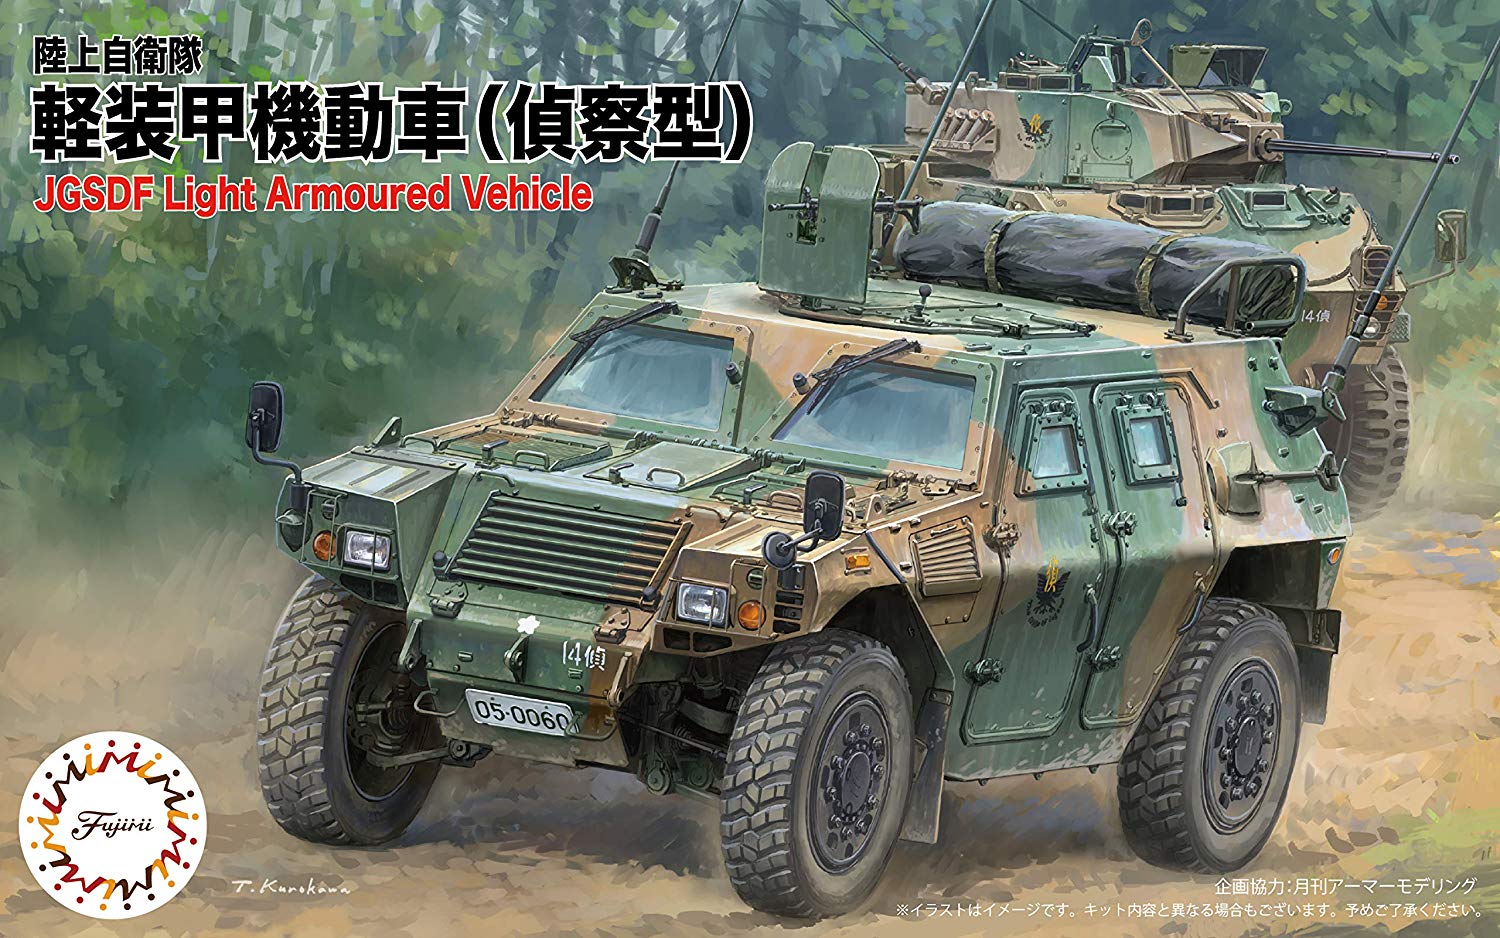 JGSDF Komatsu Light Armored Vehicle (Reconnaissance)